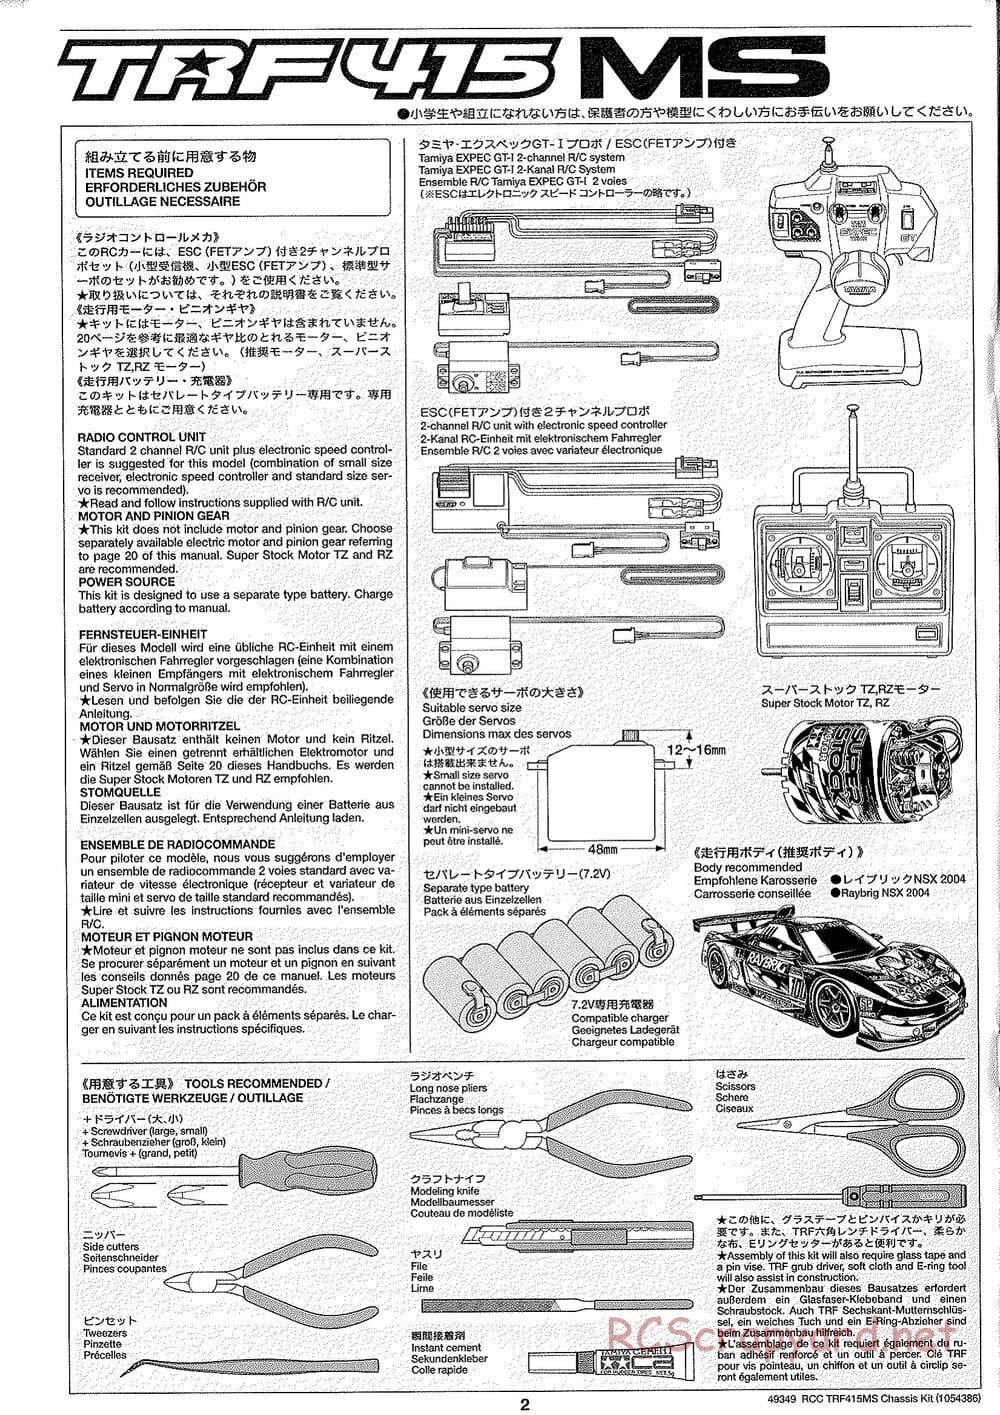 Tamiya - TRF415-MS Chassis - Manual - Page 2